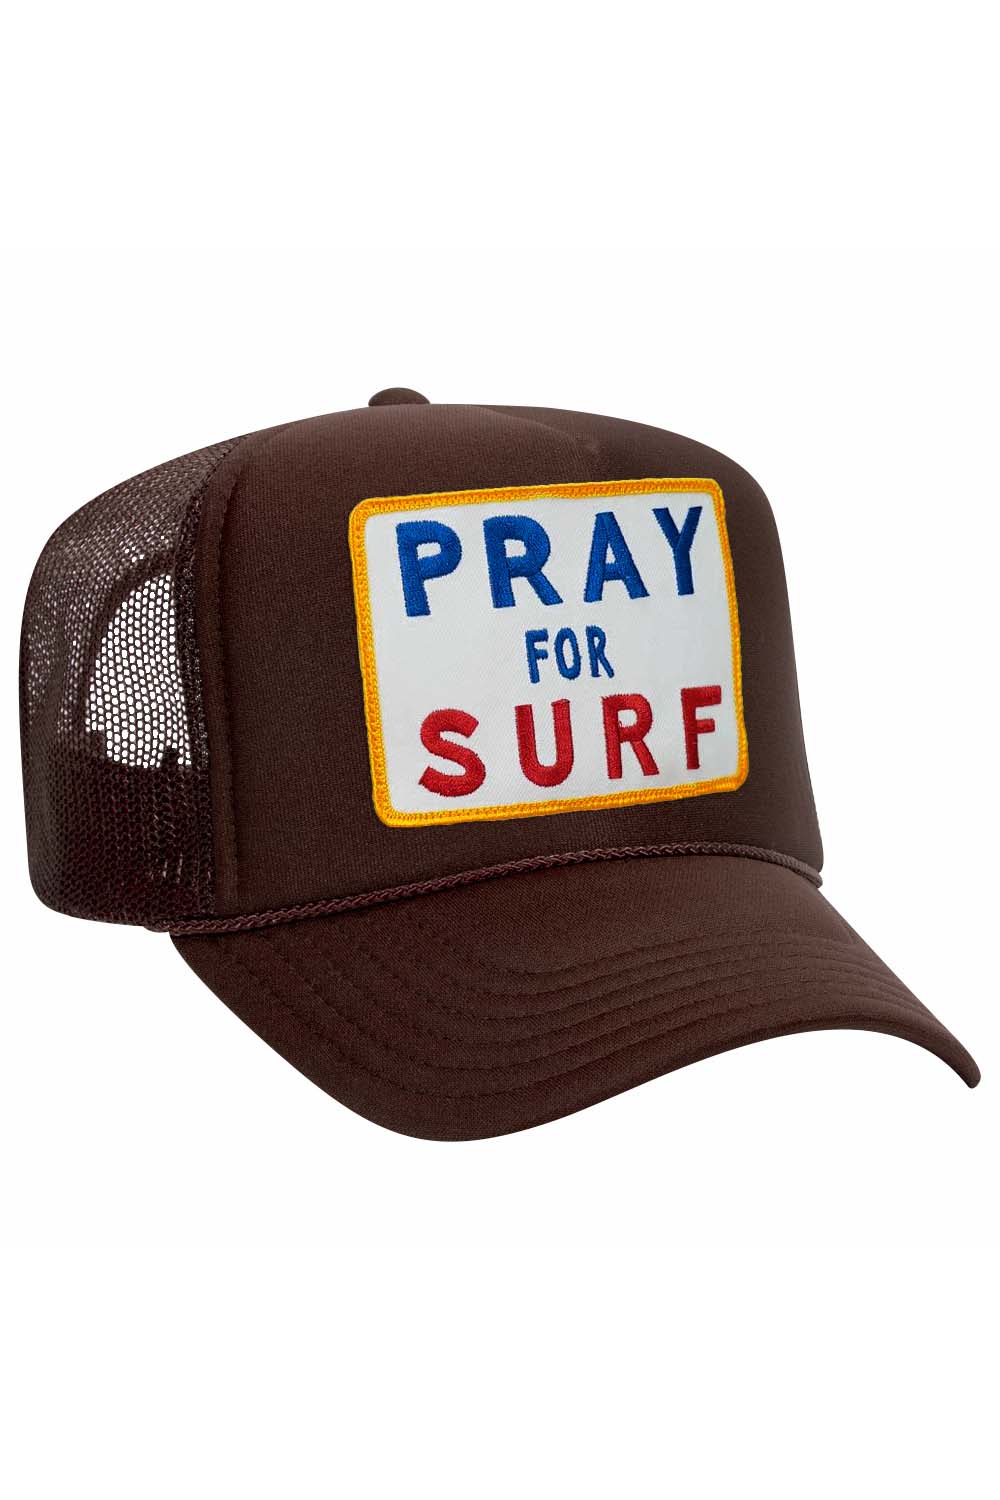 PRAY FOR SURF VINTAGE TRUCKER HAT HATS Aviator Nation OS BROWN 